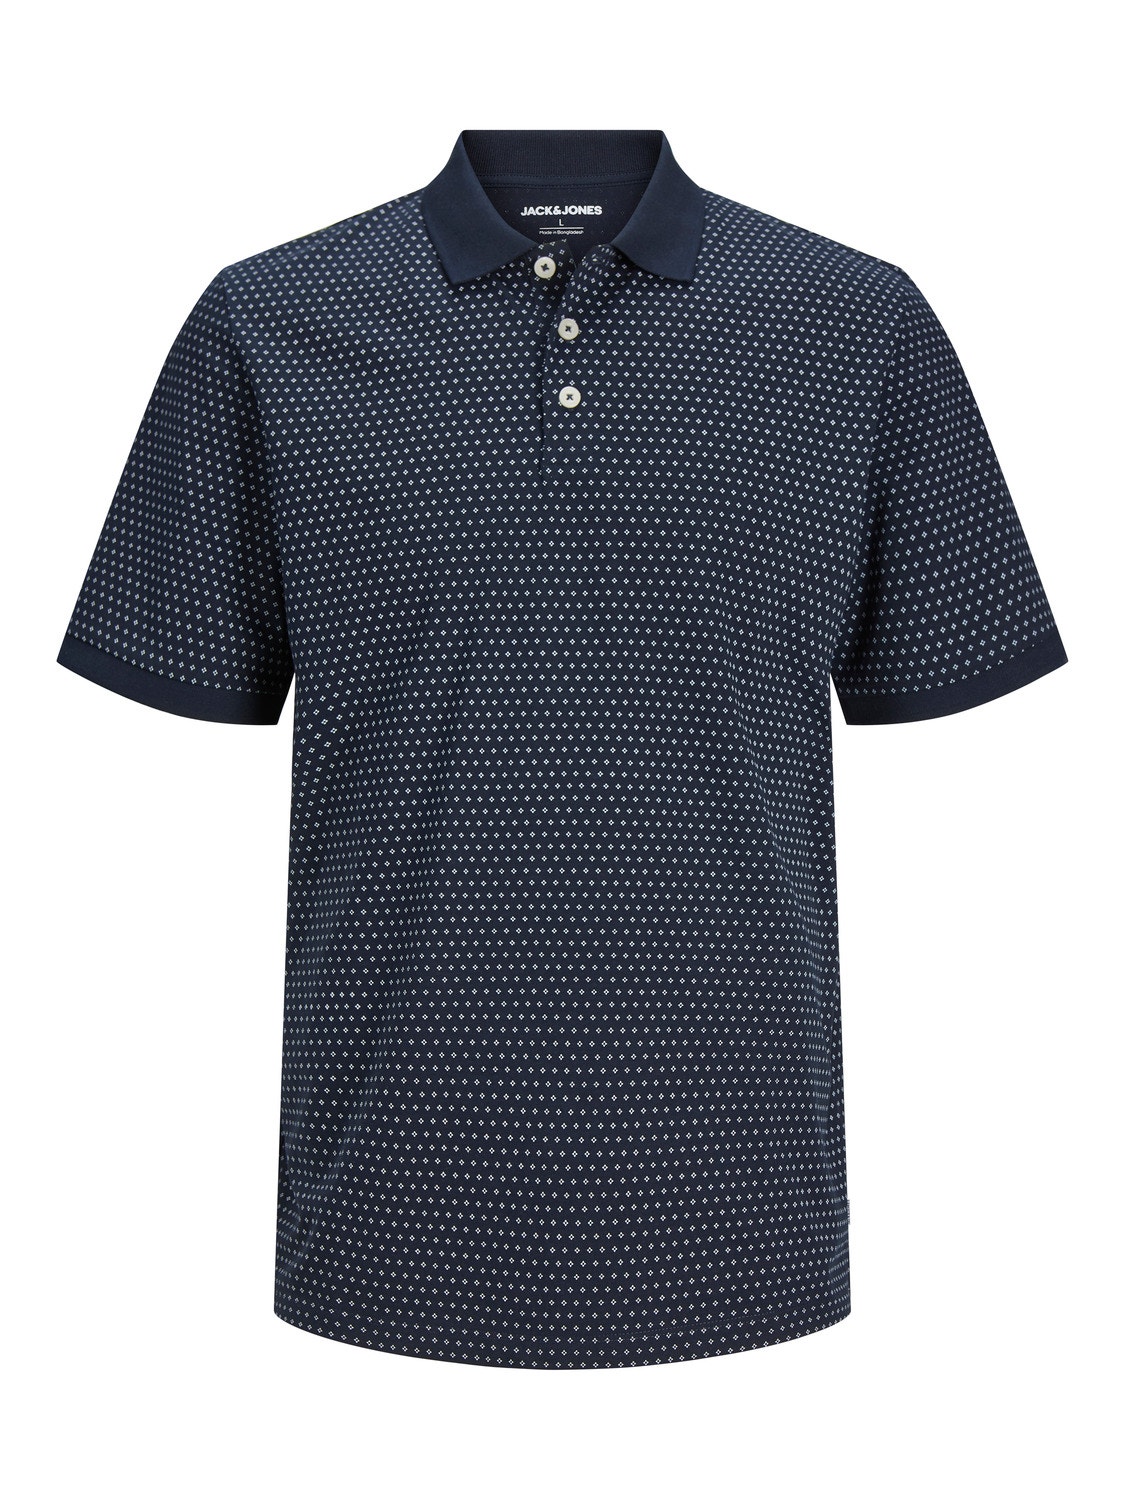 Jack & Jones Plus Size Gedruckt T-shirt -Navy Blazer - 12254901